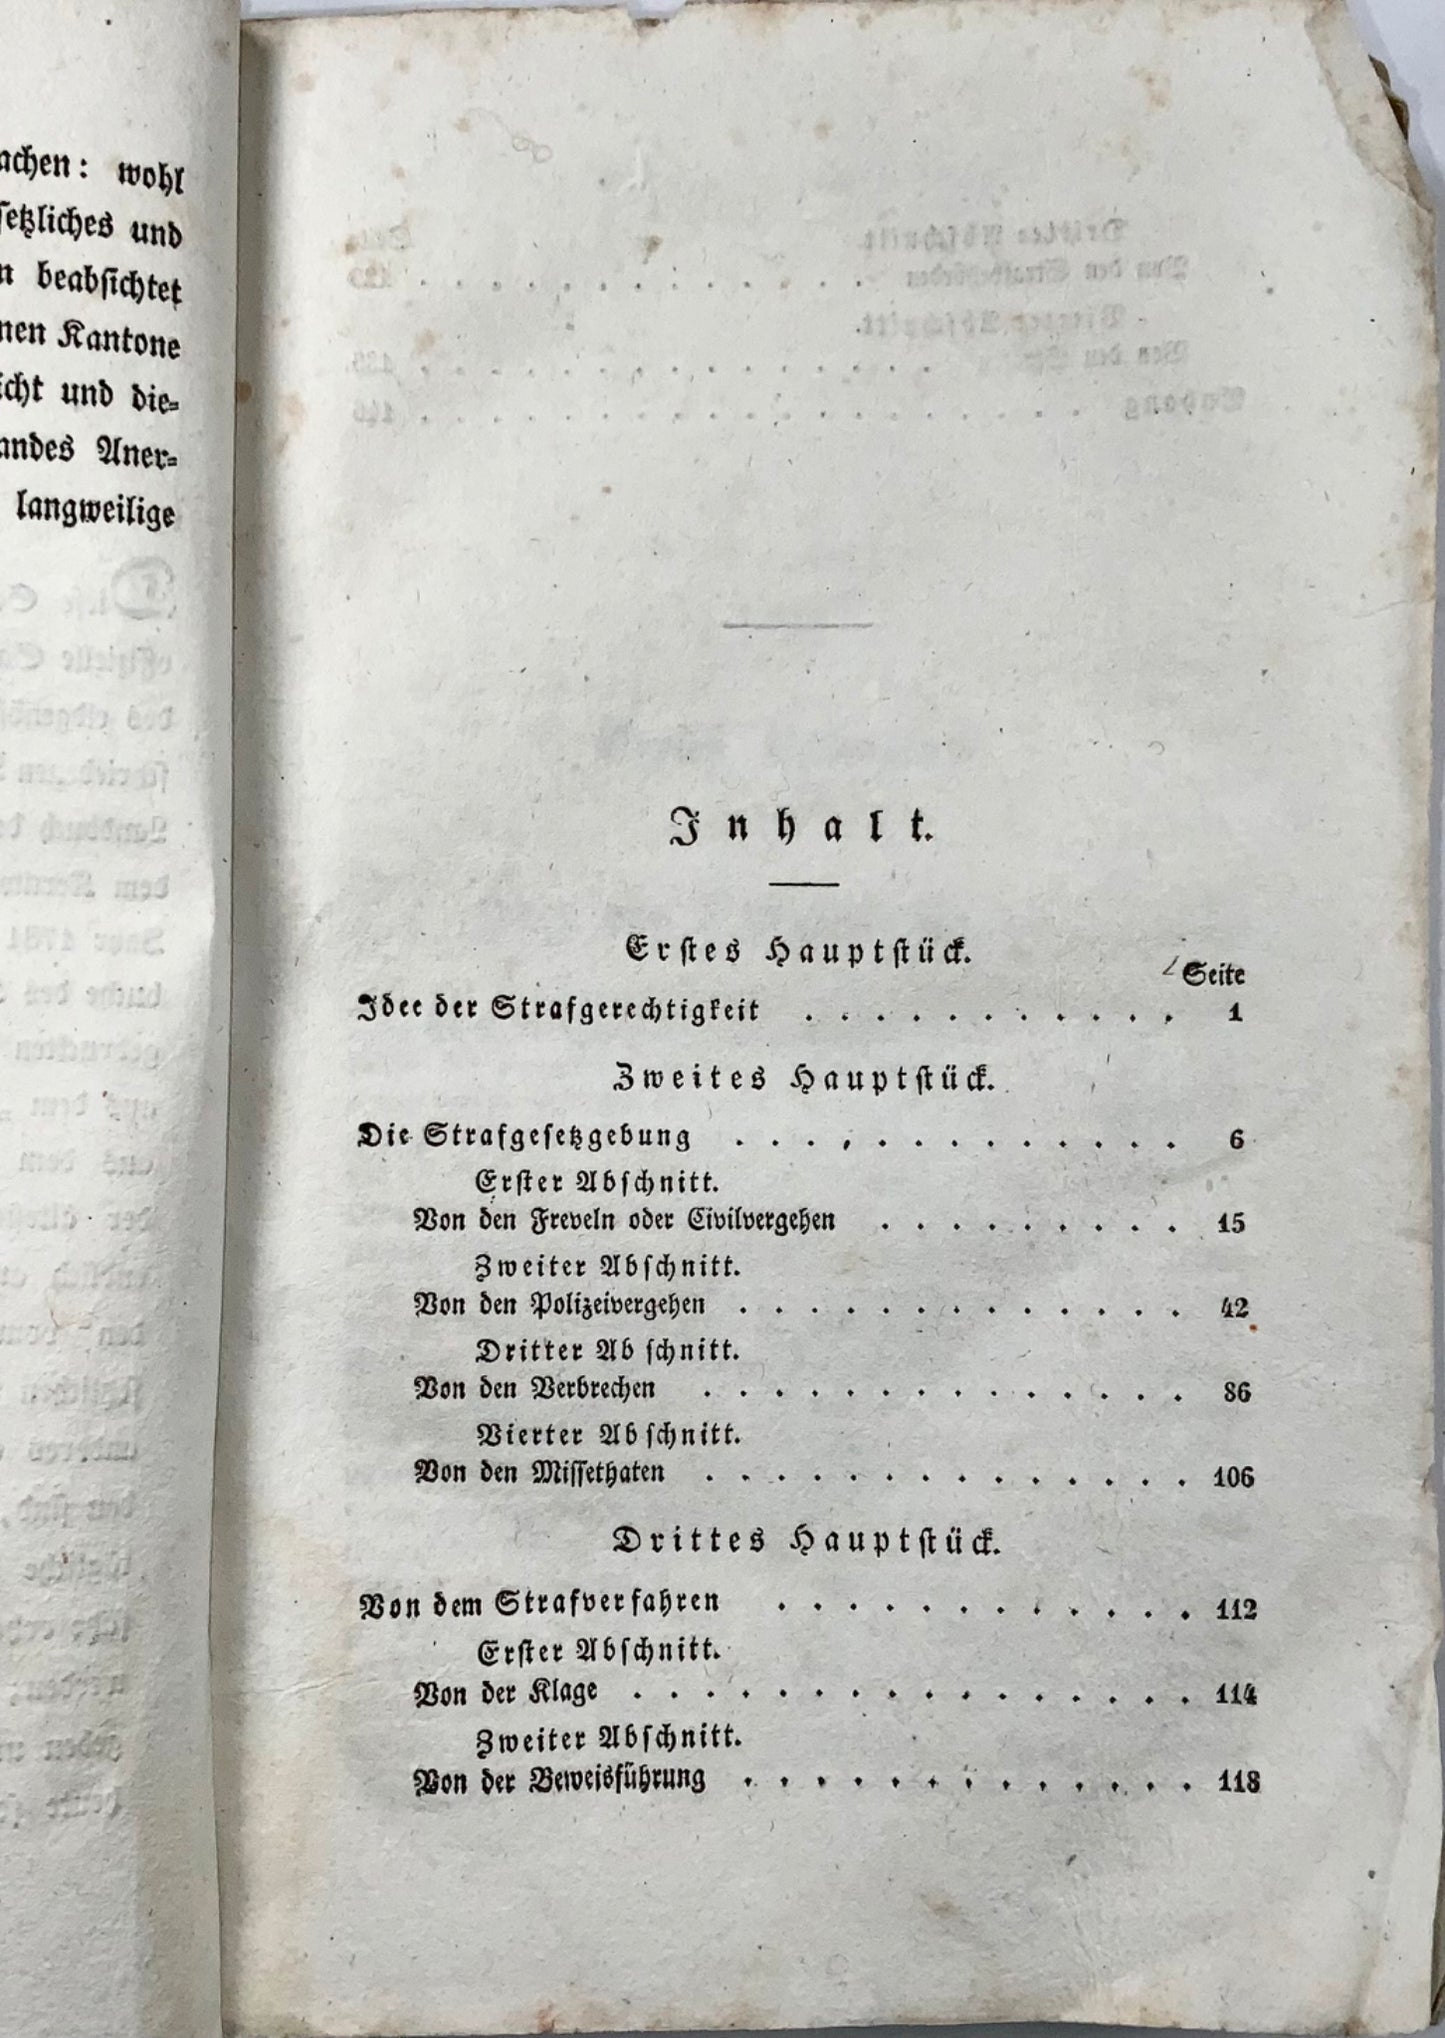 1833 Siegwart-Muller, criminal law of central Switzerland, book